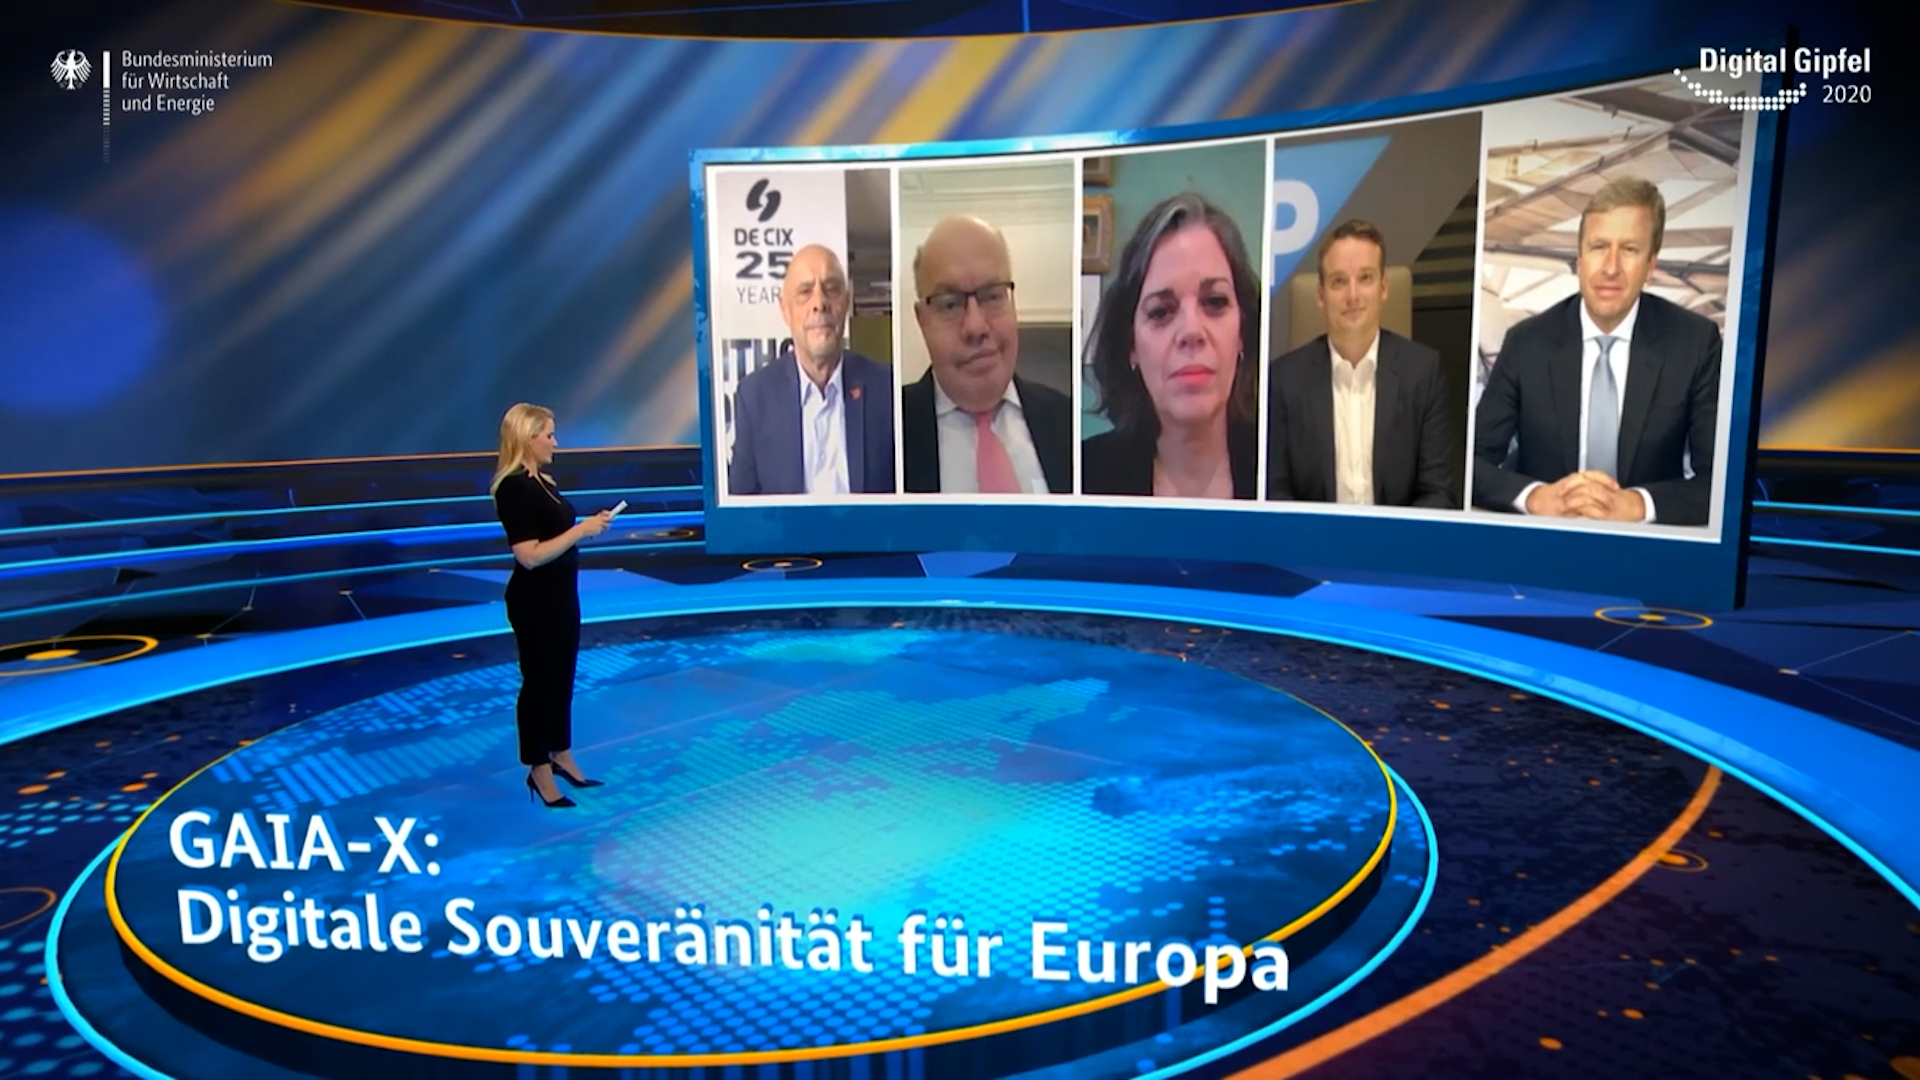 Digital Gipfel 2020: GAIA-X: Digitale Souveränität für Europa